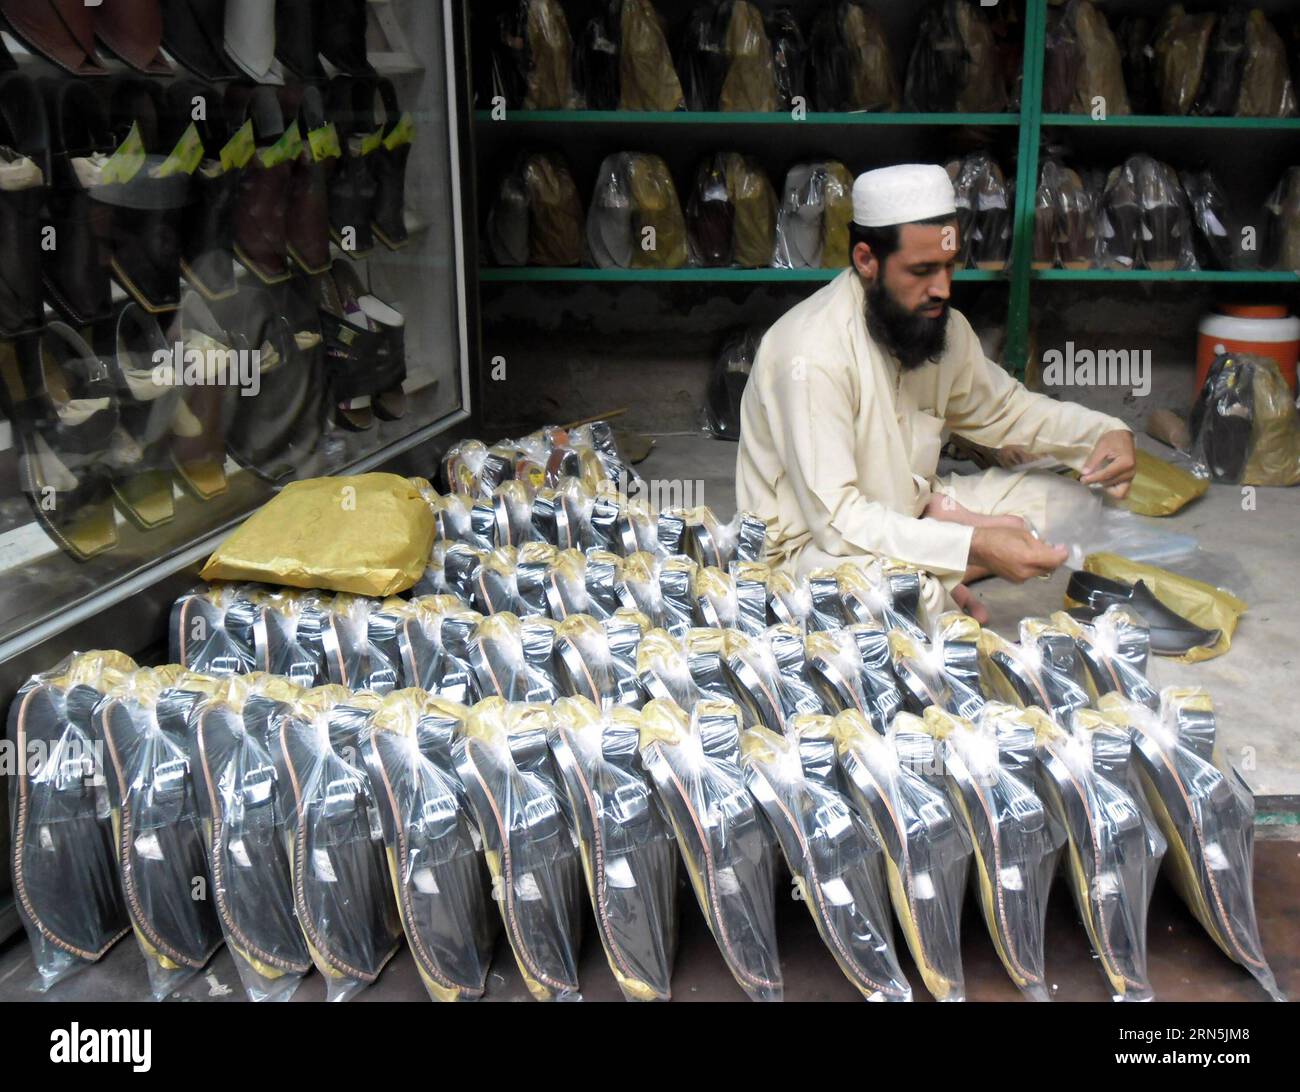 (150627) -- PESHAWAR, June 27, 2015 -- A Pakistani man packs traditional Peshawari Chappal at workshop in northwest Pakistan s Peshawar, June 27, 2015. Peshawari Chappal is a traditional footwear of Pakistan, worn especially by Pashtuns in the Khyber Pakhtunkhwa region of Pakistan. ) PAKISTAN-PESHAWAR-PESHAWARI CHAPPAL AhmadxSidique PUBLICATIONxNOTxINxCHN   150627 Peshawar June 27 2015 a Pakistani Man Packs Traditional  CHAPPAL AT Workshop in Northwest Pakistan S Peshawar June 27 2015  CHAPPAL IS a Traditional Footwear of Pakistan worn especially by  in The Khyber Pakhtunkhwa Region of Pakista Stock Photo